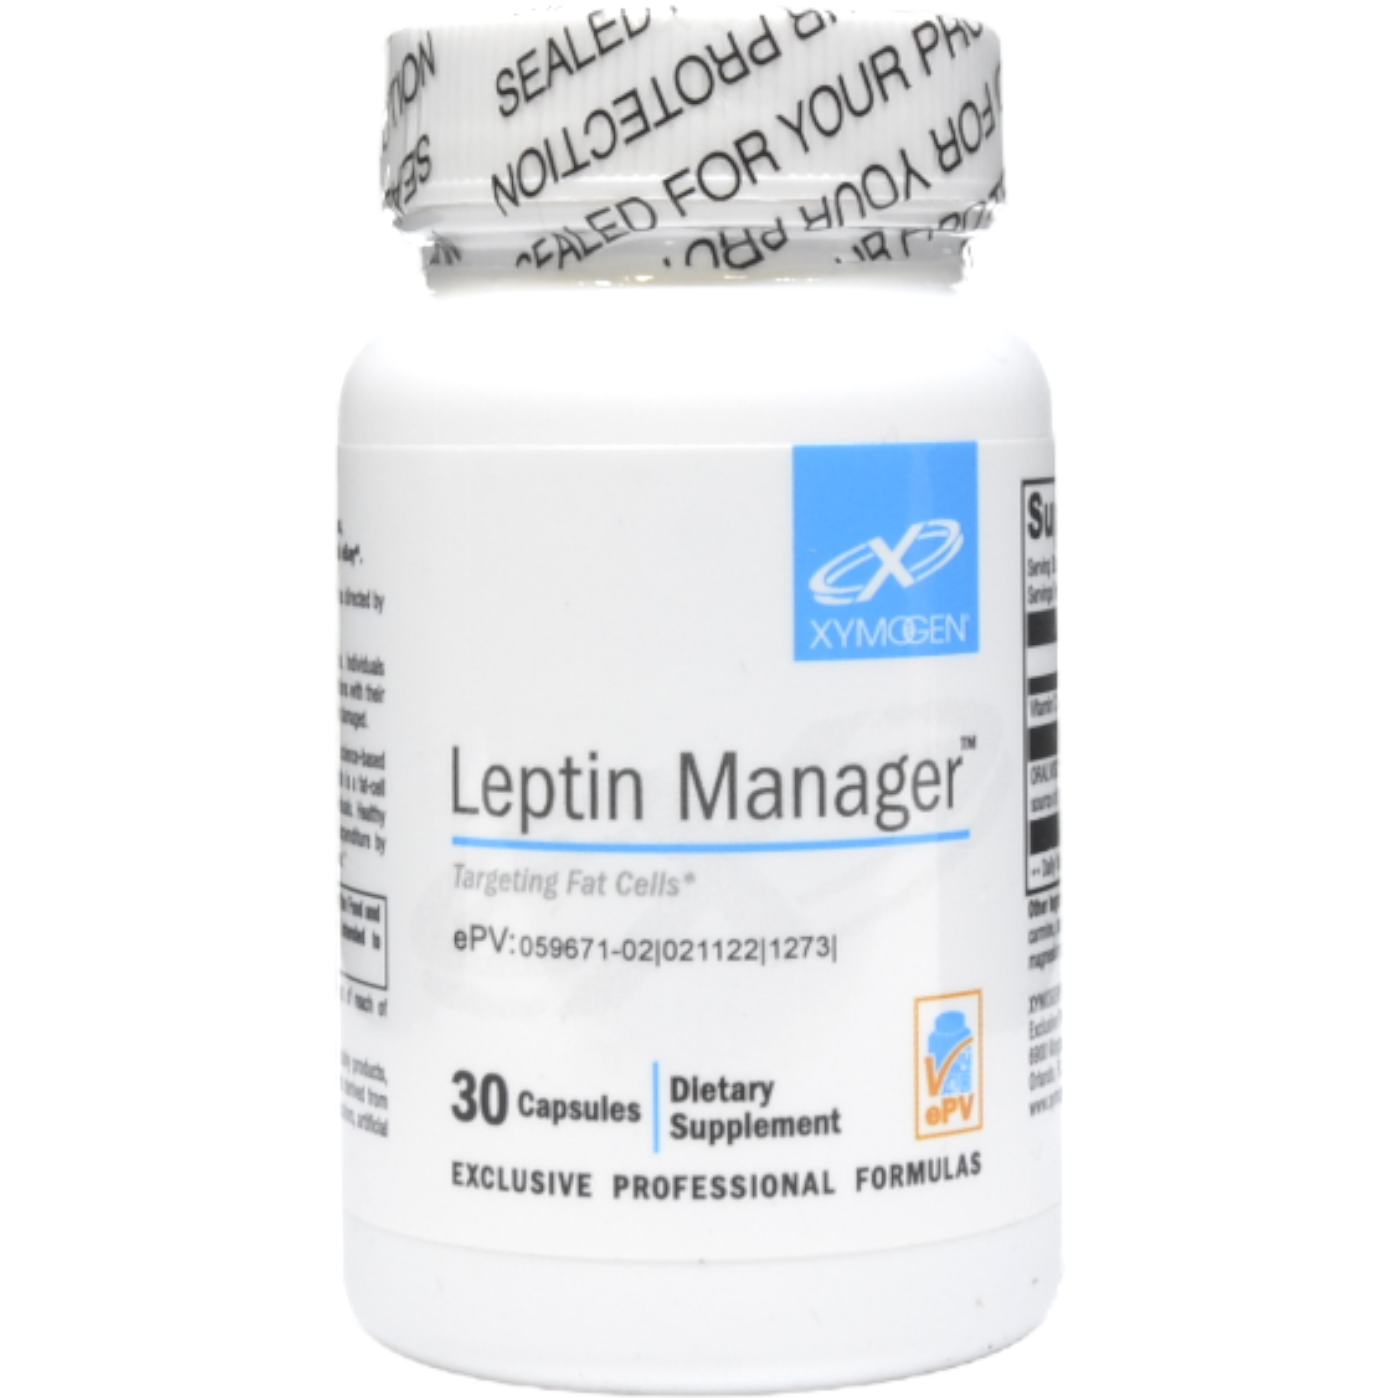 Xymogen Leptin Manager 30 Capsules - ePothex